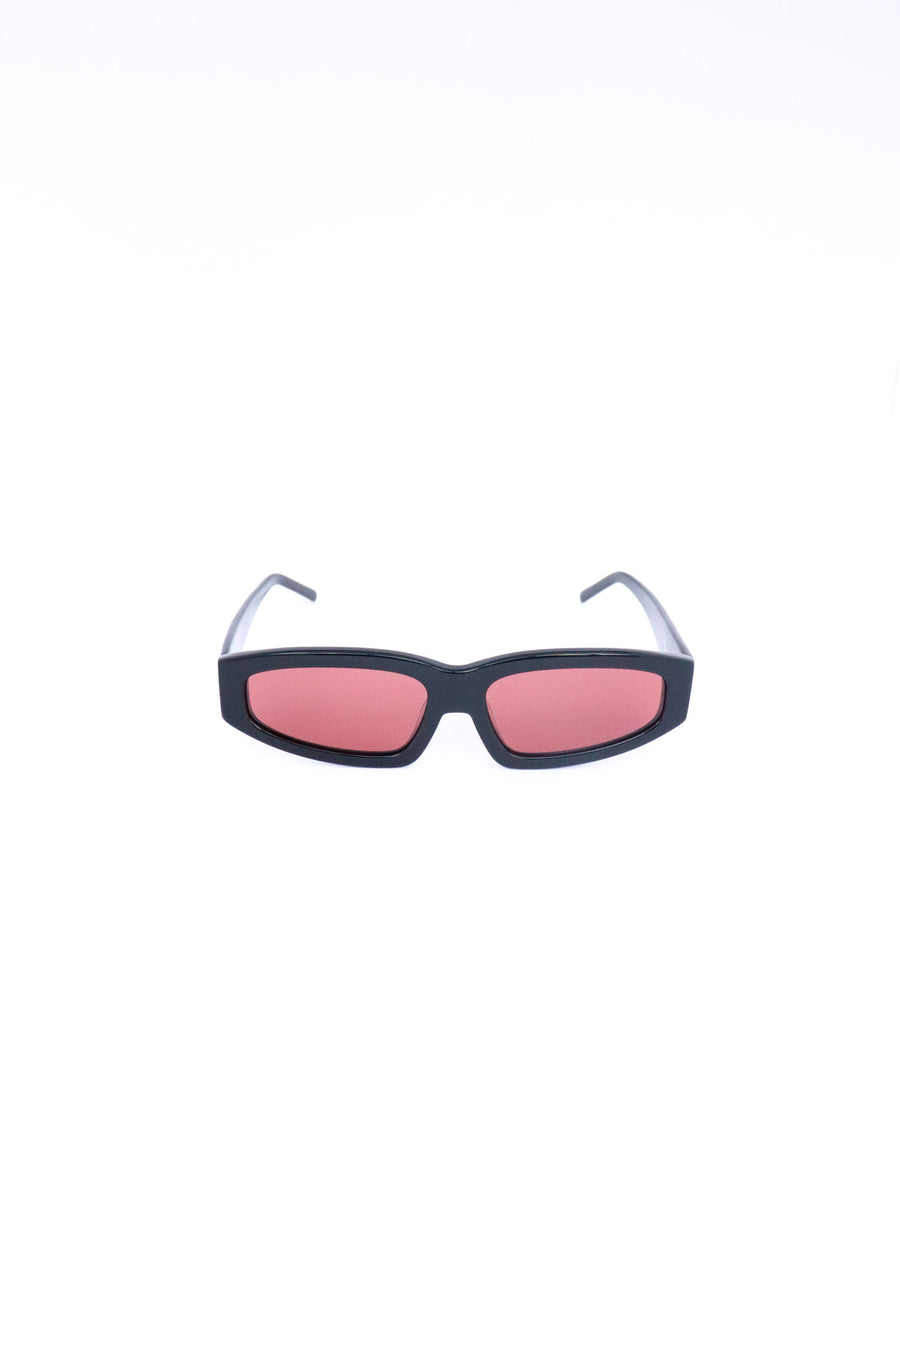 Avoir Eyewear - Cela in Midnight Black with Red lens - Sunglasses